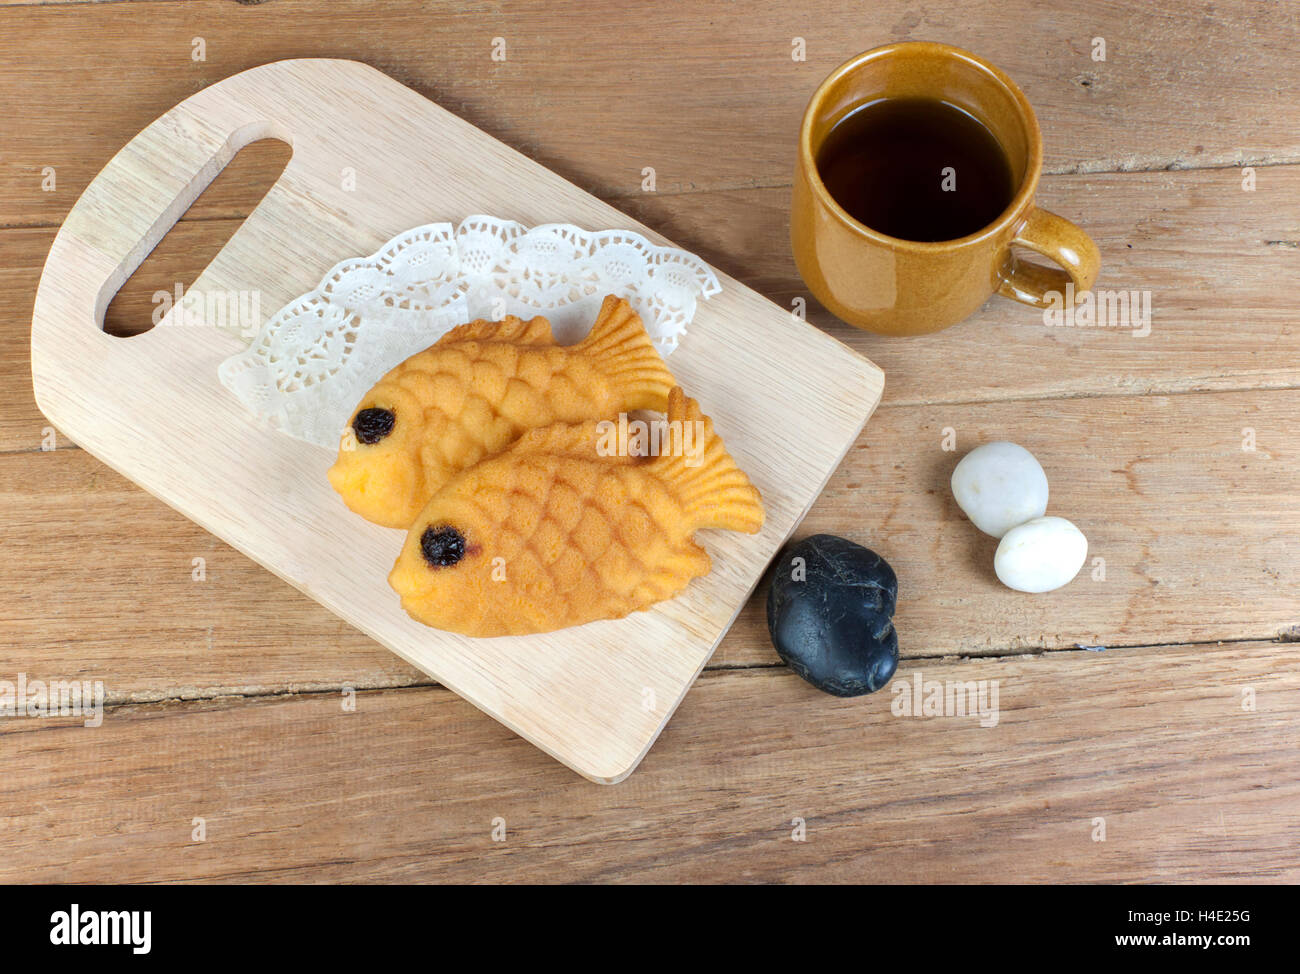 Taiyaki, japanese fish shaped pancake. Eaten with hot tea on wood table Stock Photo